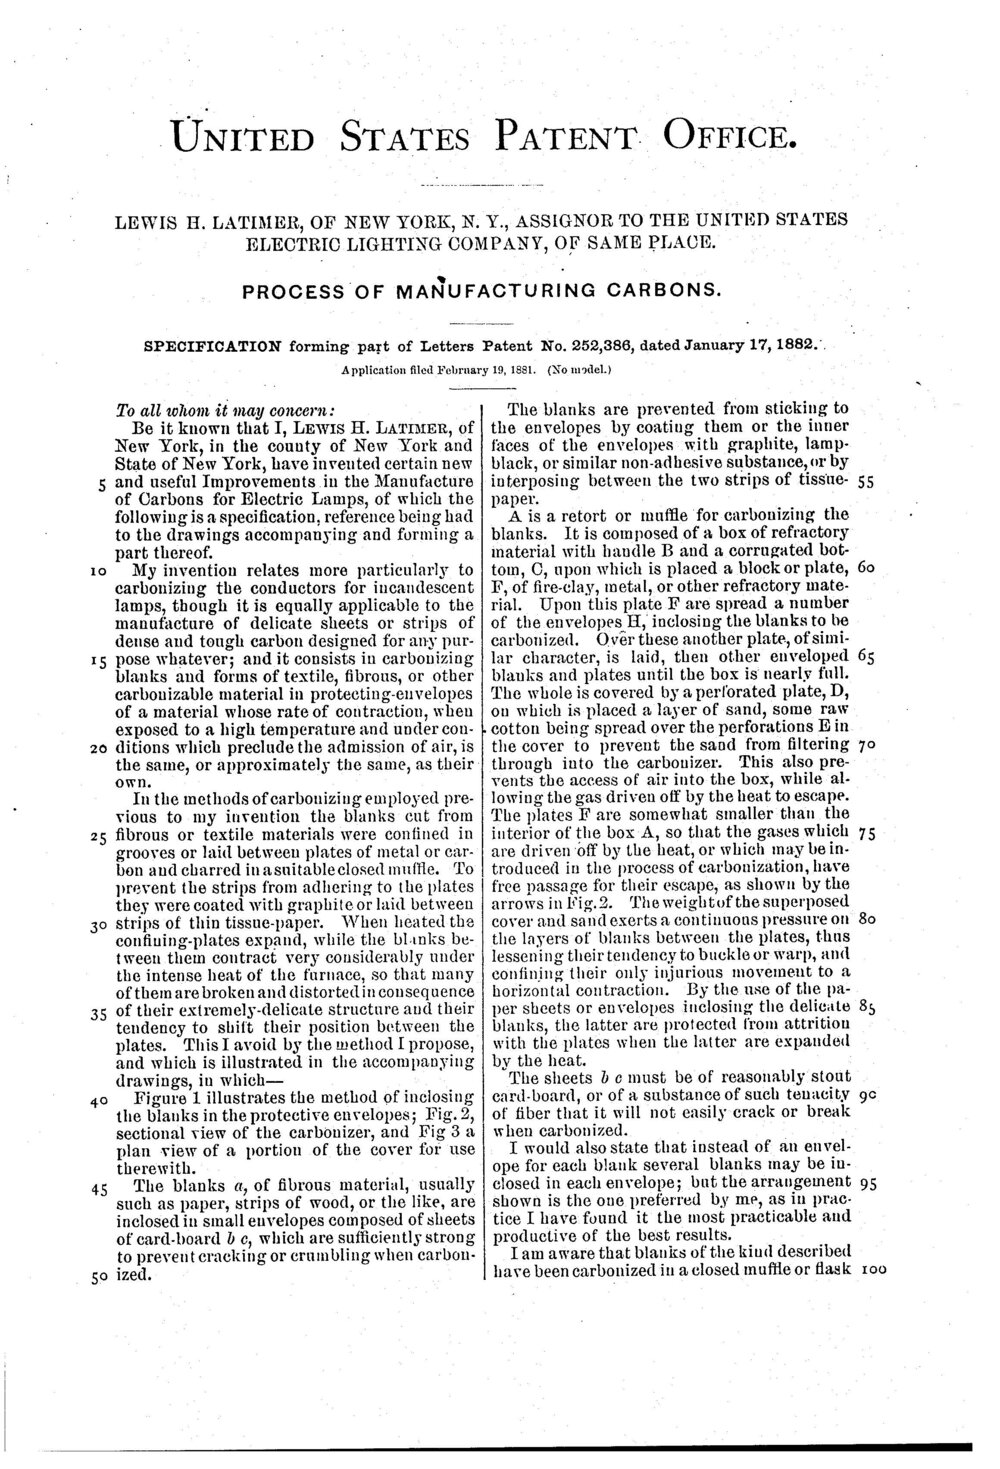 Original patent text.